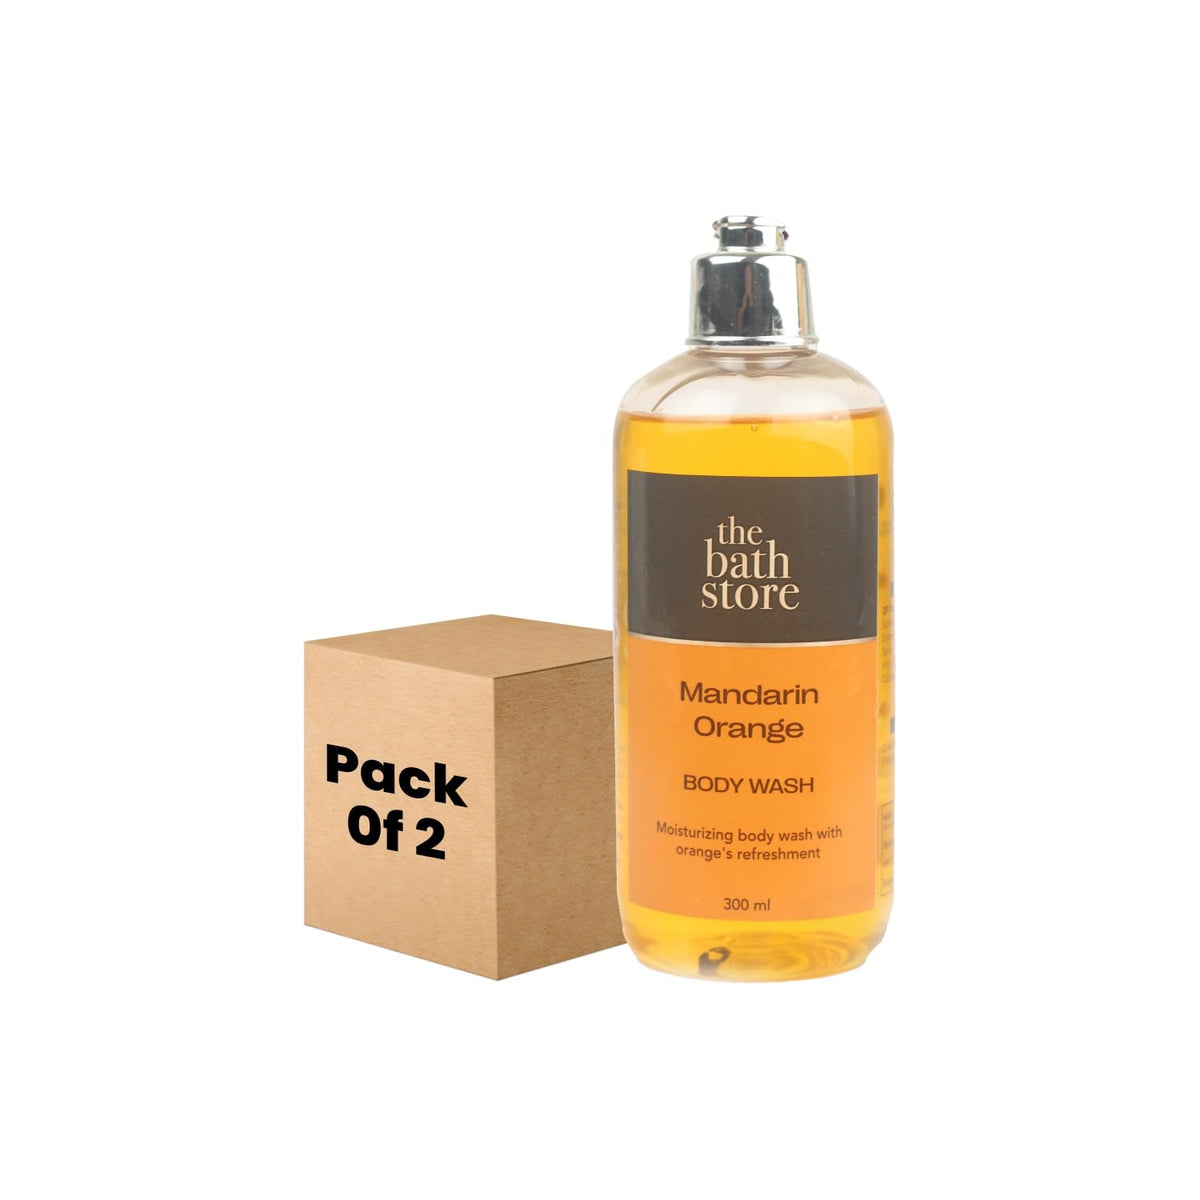 The Bath Store Mandarin Orange Body Wash - Deeply Cleansing | Nourishing Liquid Soap | Men and Women - 300ml (Pack of 2)